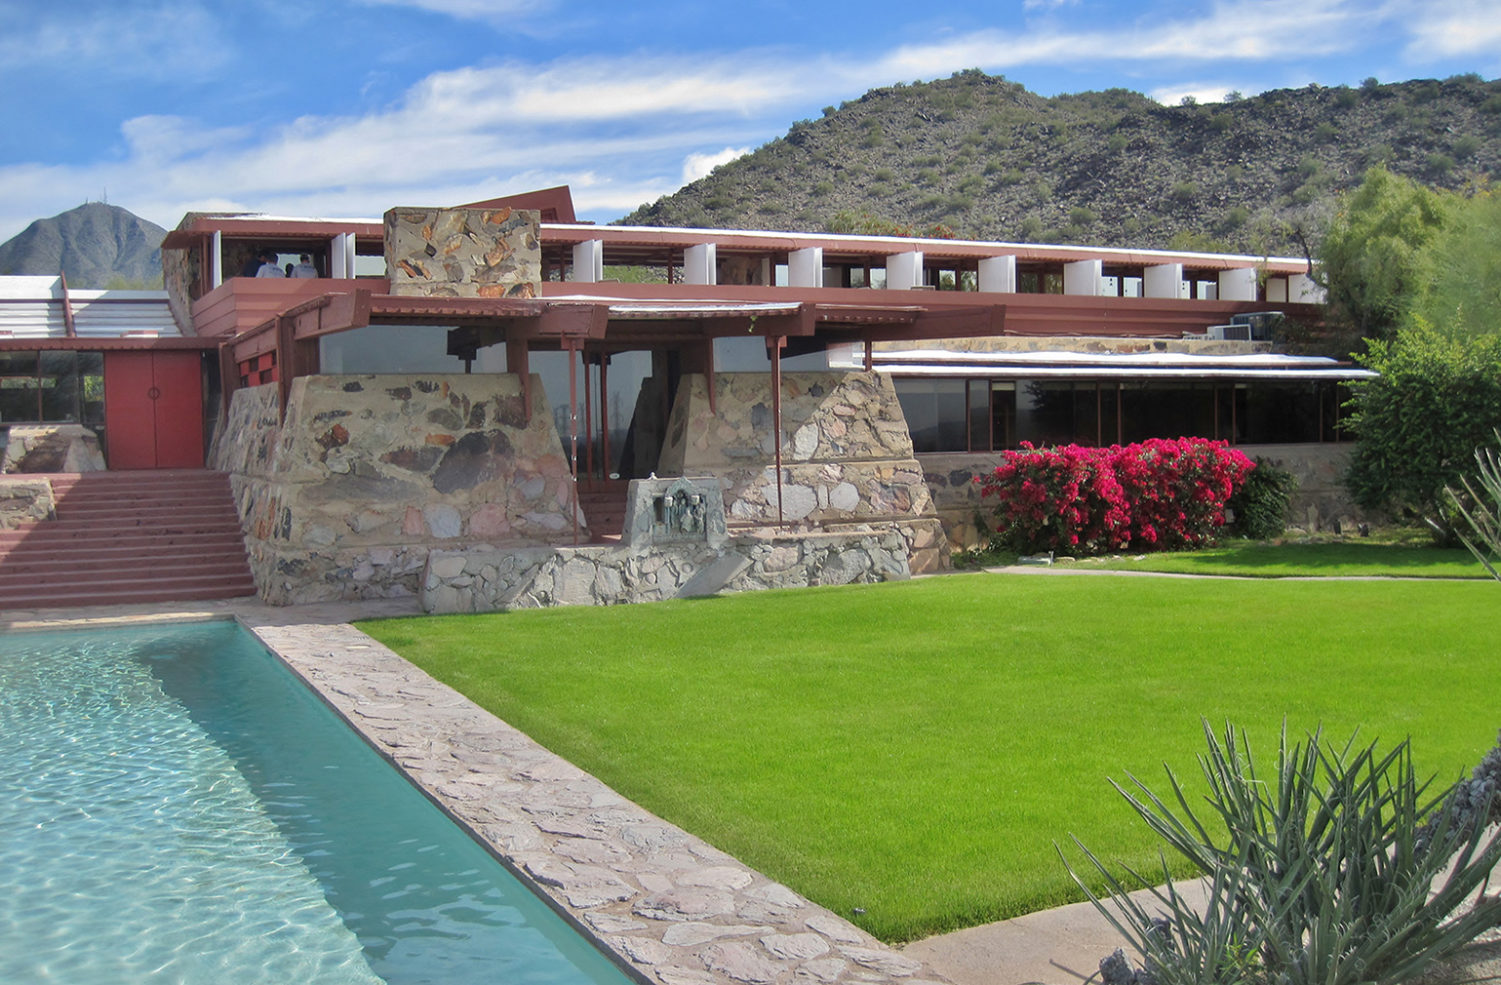 Architects homes including Frank Lloyd Wright's Scottsdale residence